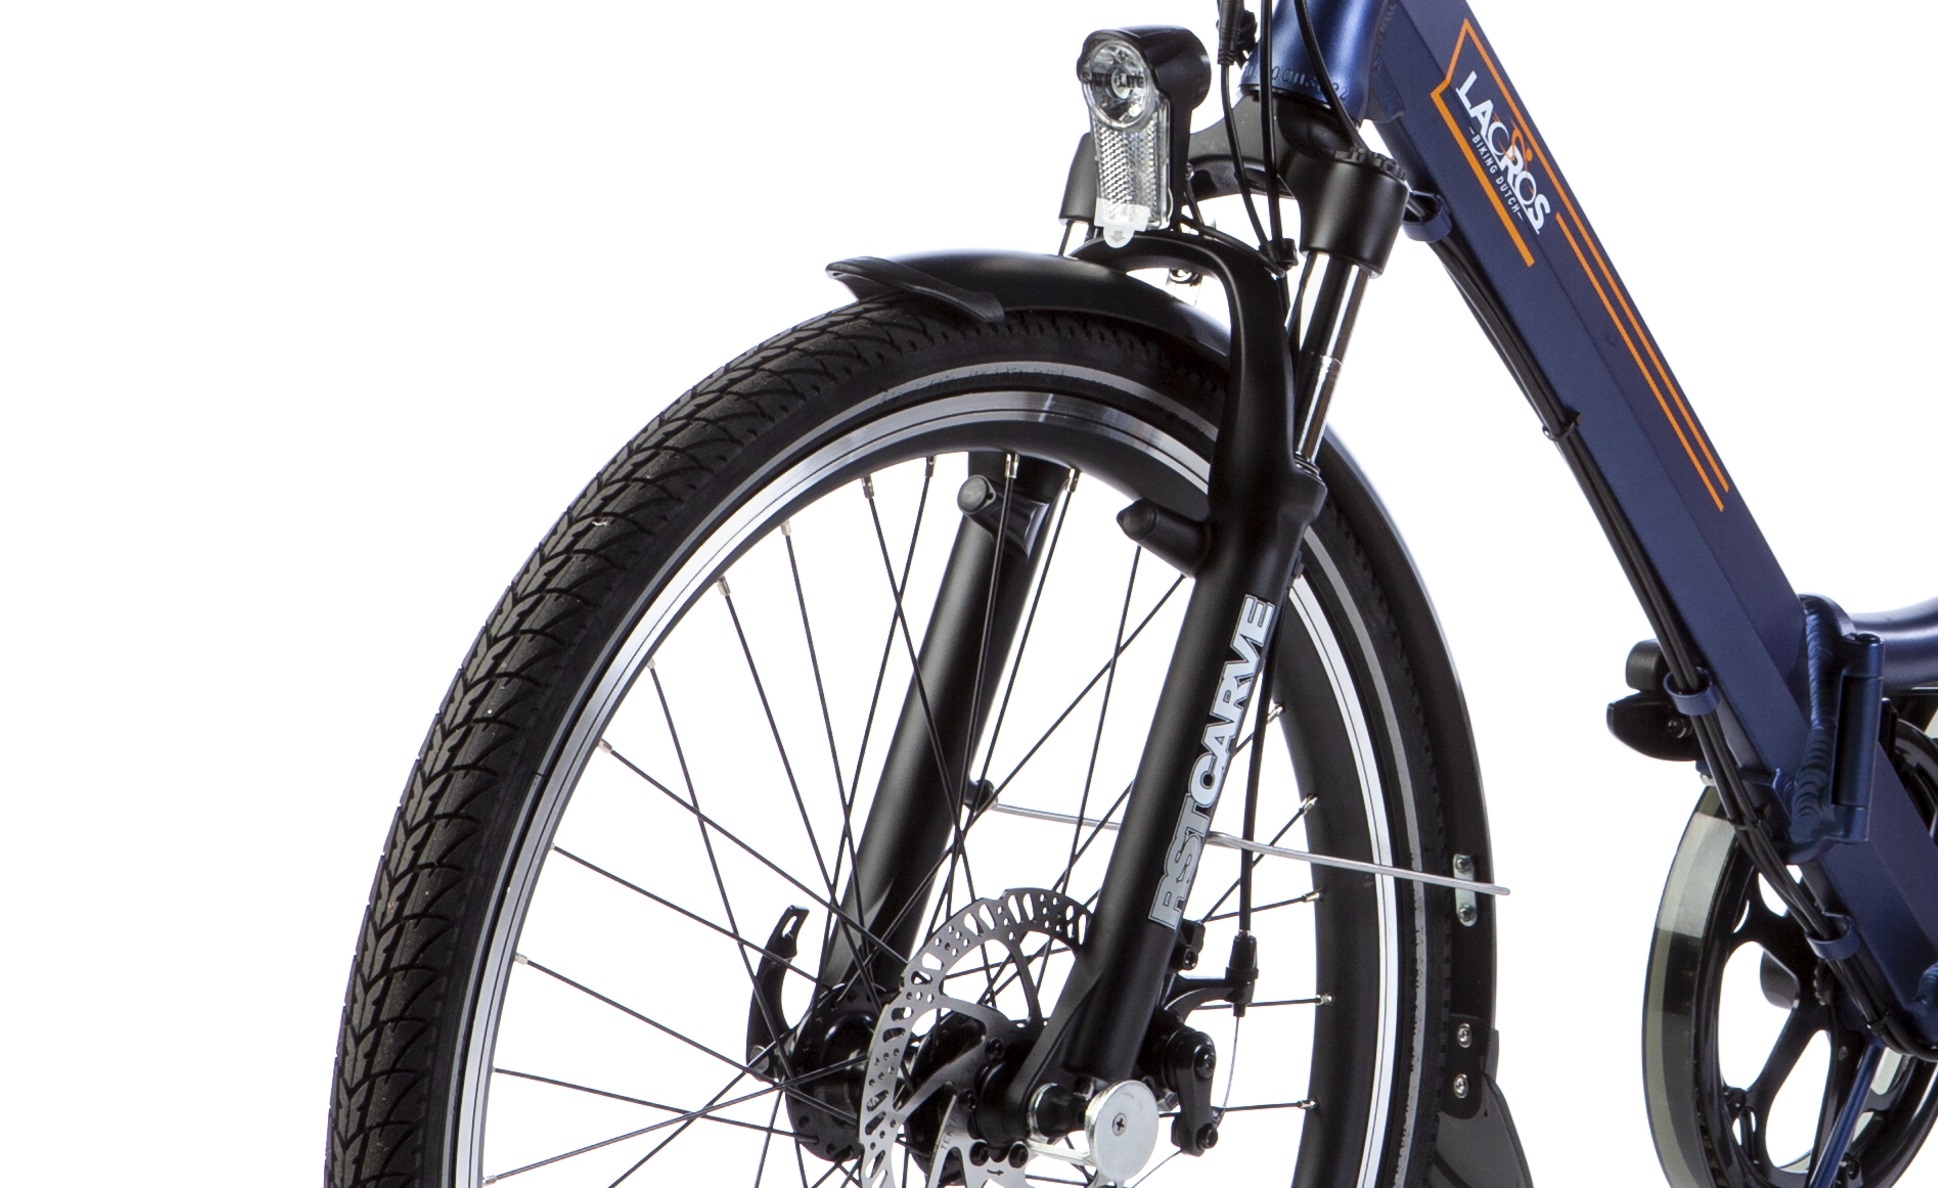 electric folding bike, lacros, scamper s200xl, matt blue